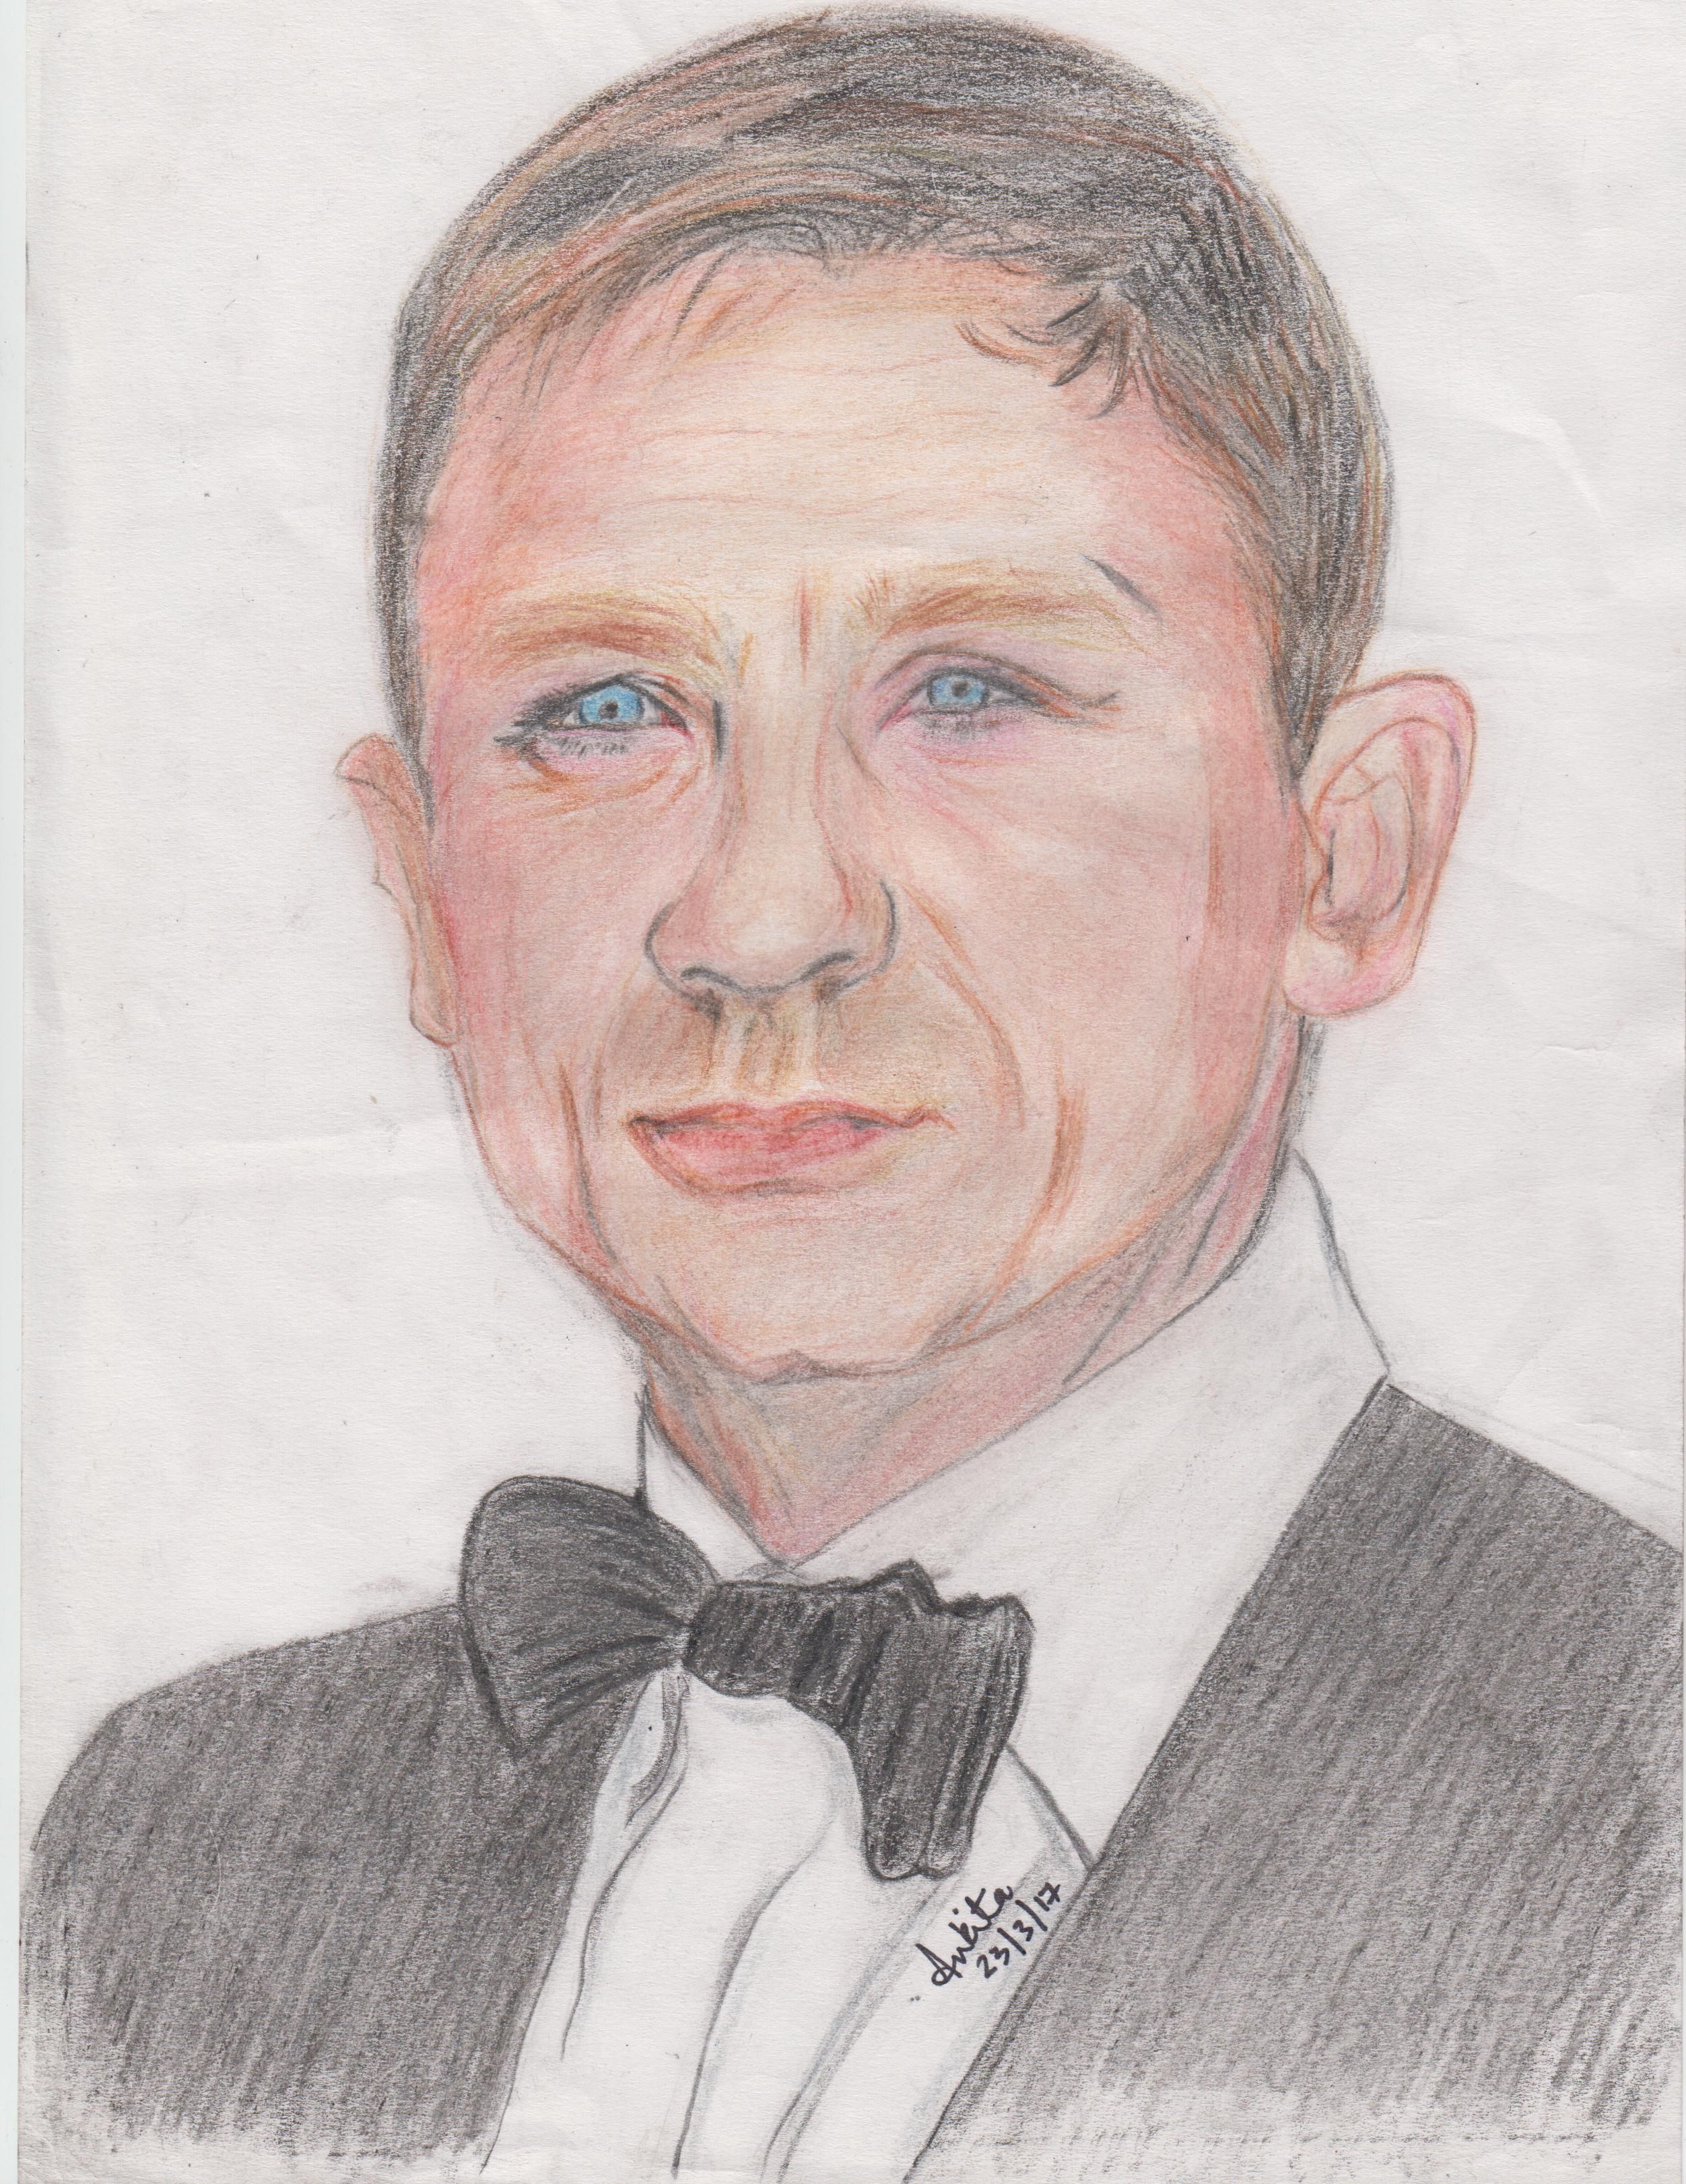 James Bond Drawing Image